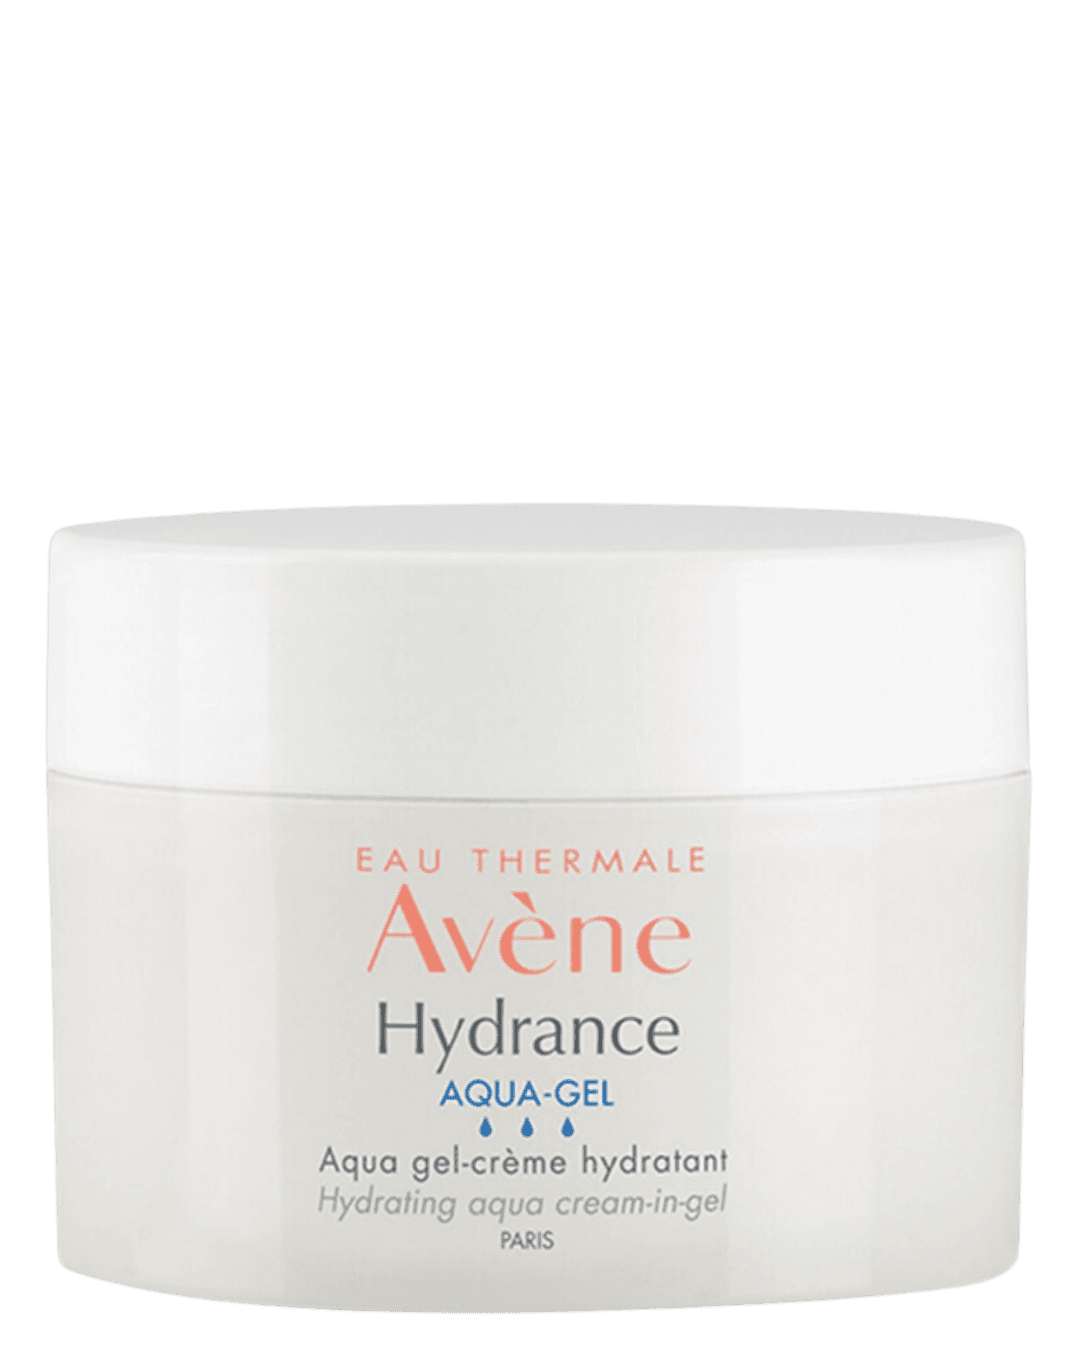 Avene Hydrance AQUA-GEL Aqua Cream-in-Gel